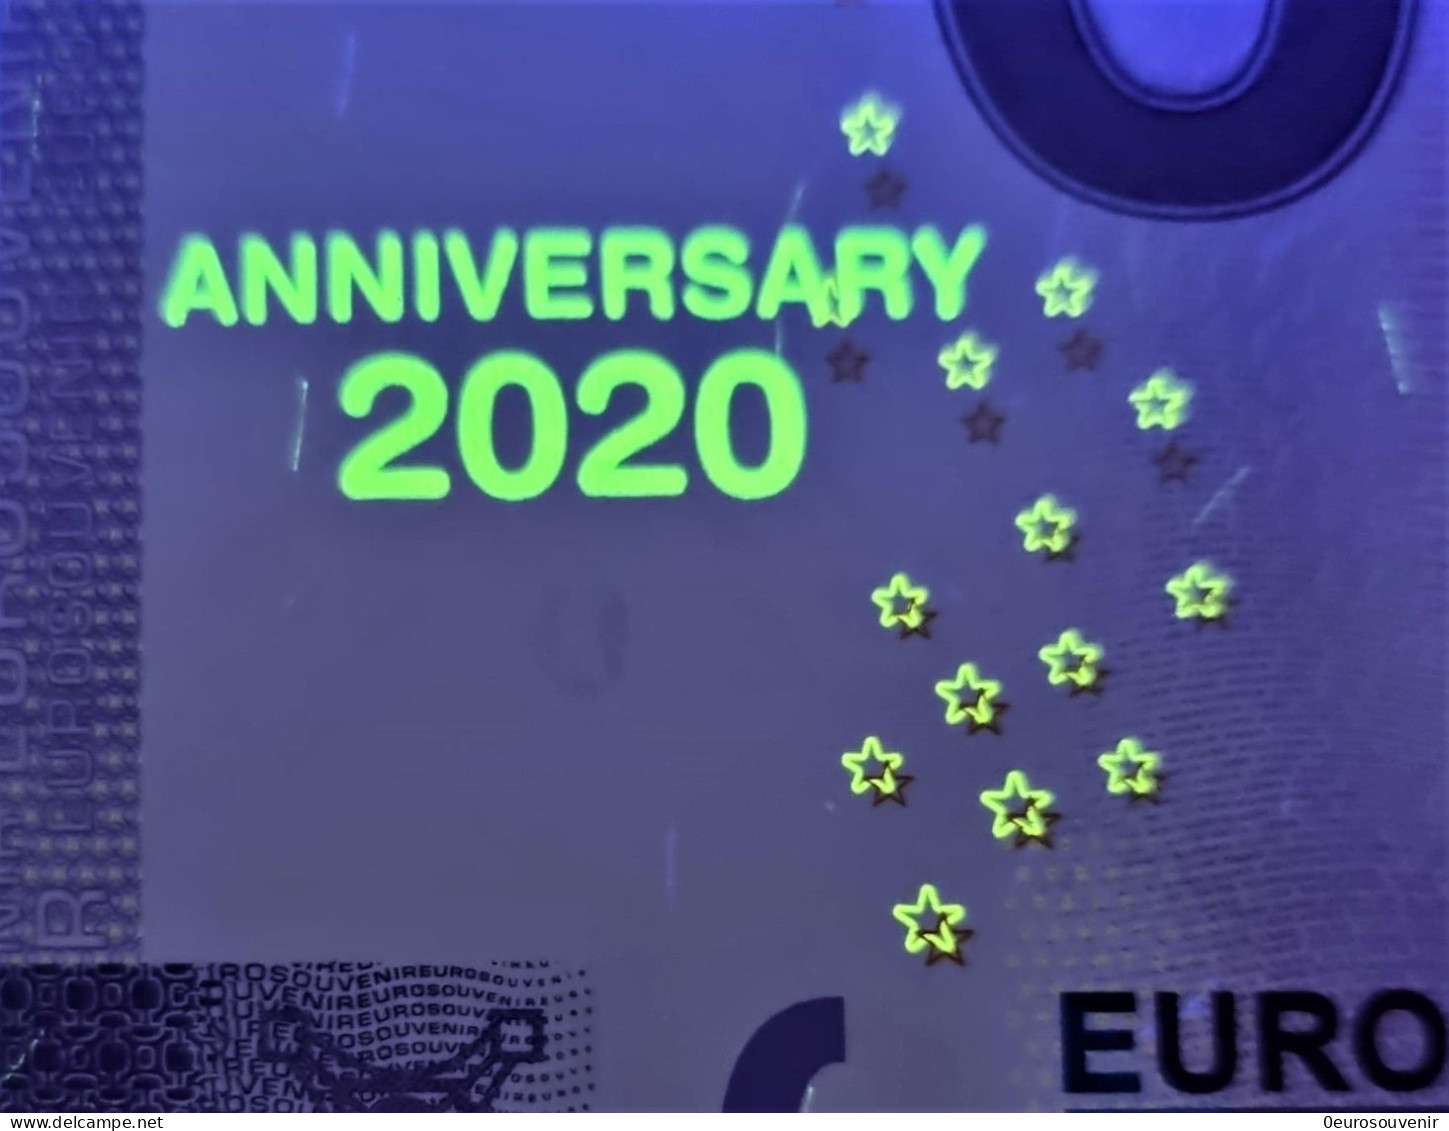 0-Euro TEAC 2020-1 THE QUIET MAN IRELAND Set NORMAL+ANNIVERSARY - Pruebas Privadas